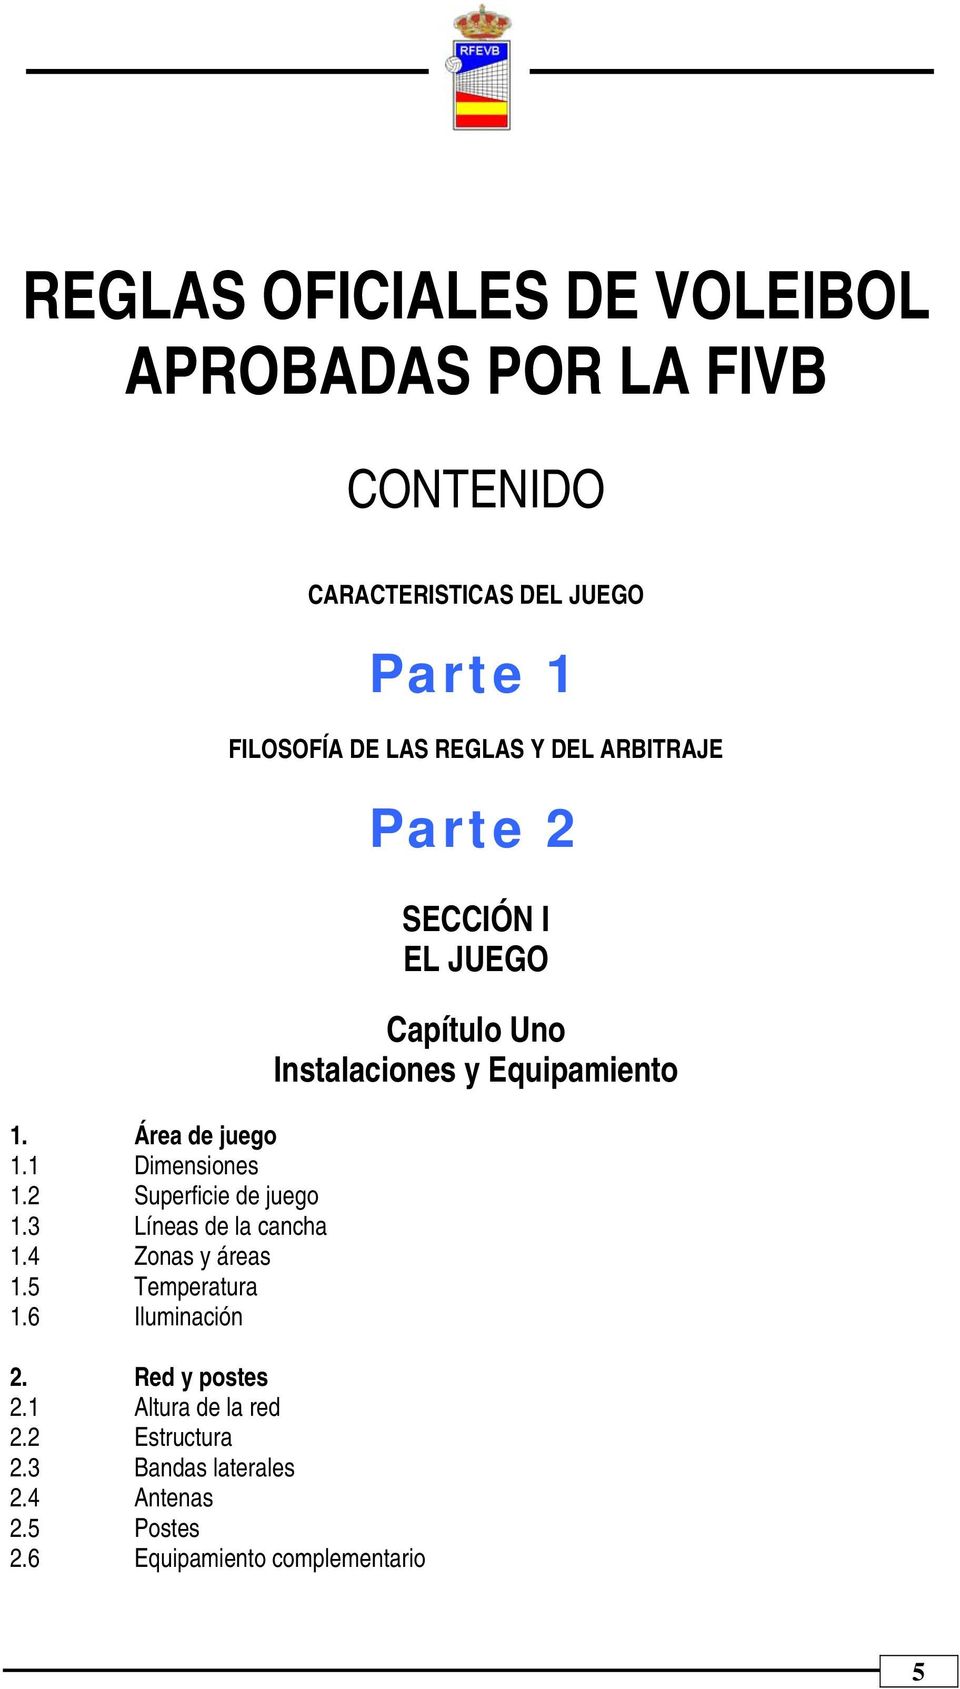 1 Altura de la red 2.2 Estructura 2.3 Bandas laterales 2.4 Antenas 2.5 Postes 2.